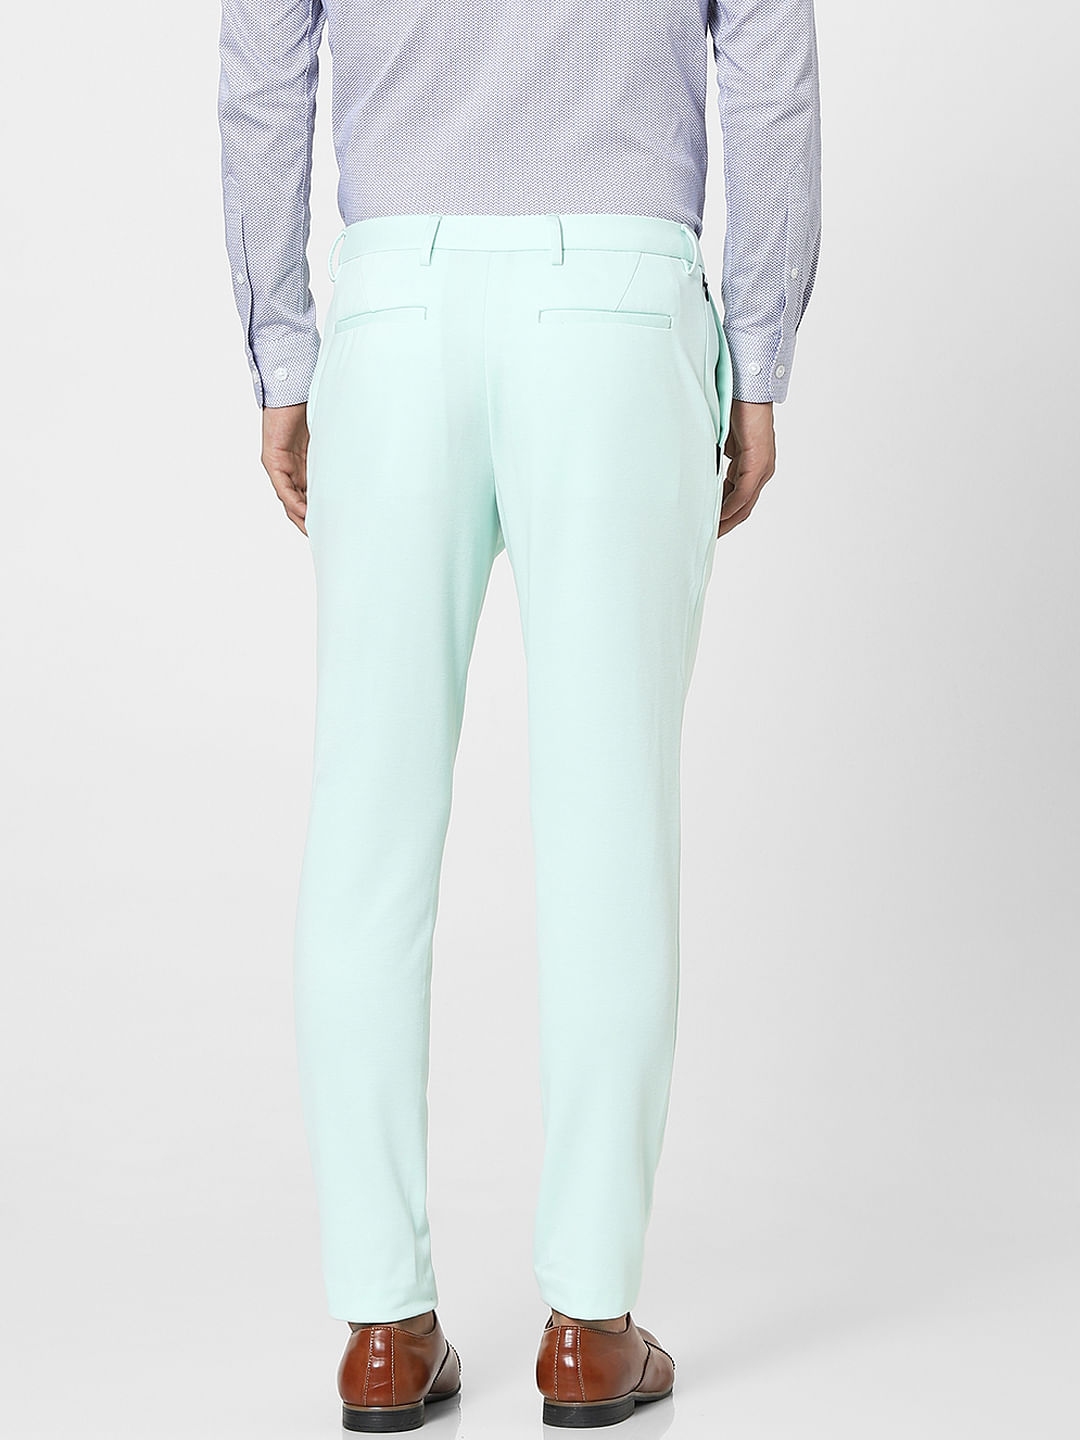 Buy Men Navy Textured Slim Fit Formal Trousers Online  734768  Peter  England